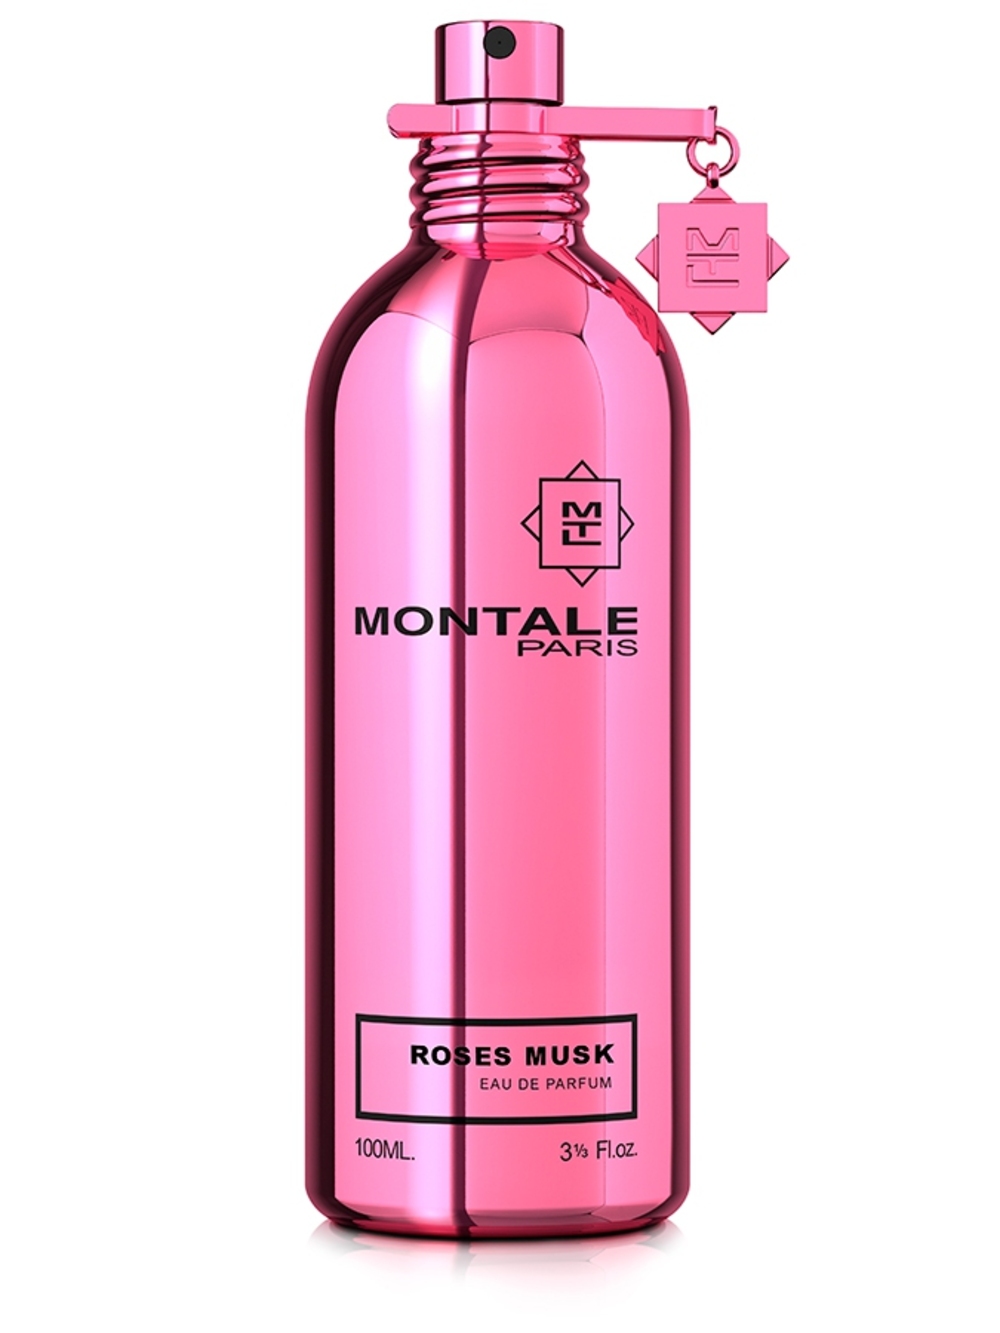 Купить Парфюмерная вода Montale, Montale Roses Musk 100ml тестер, Франция